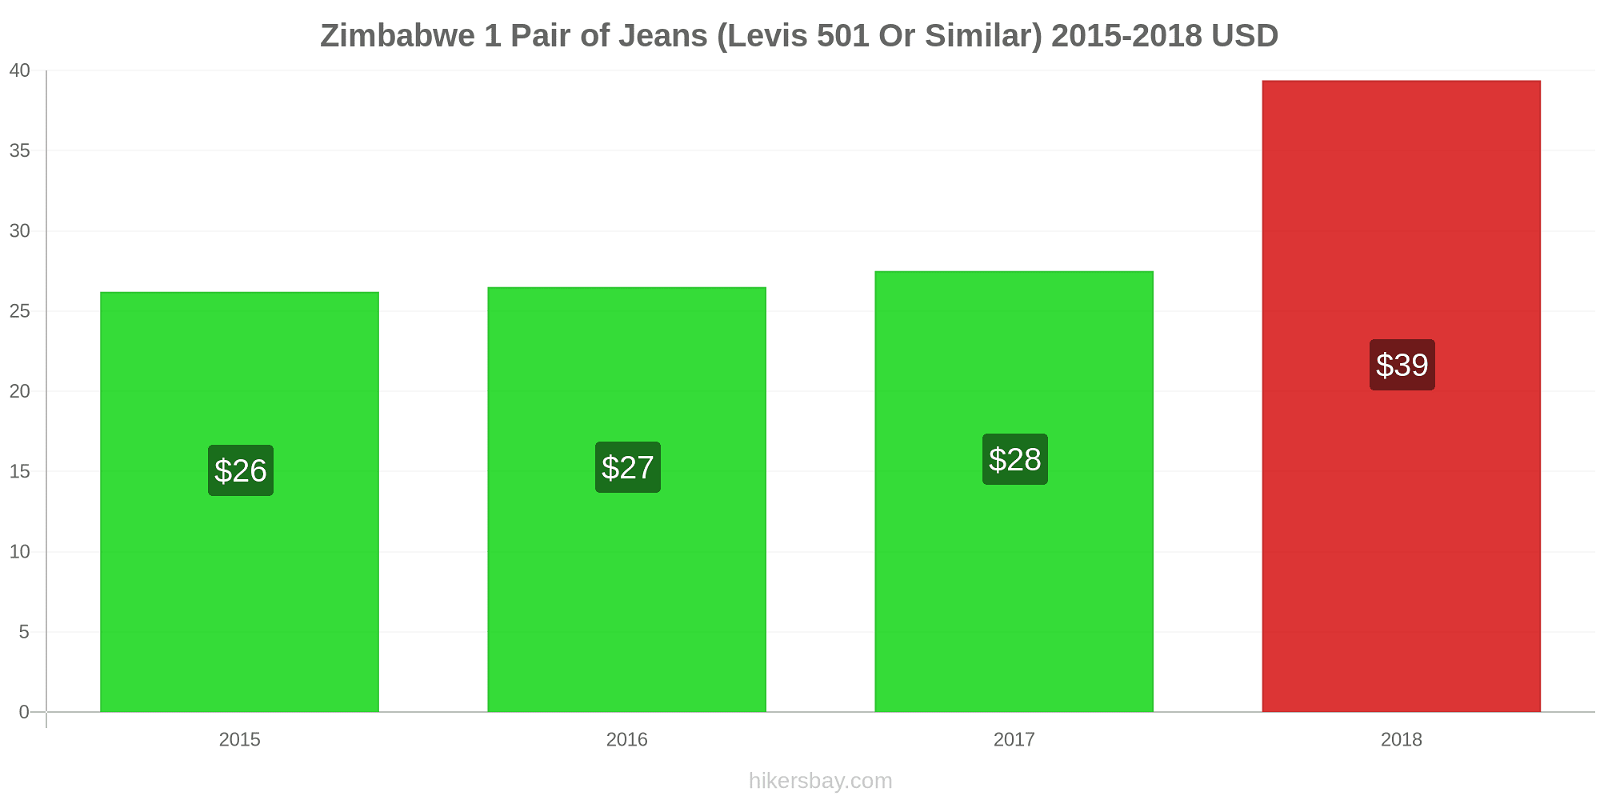 Zimbabwe price changes 1 pair of jeans (Levis 501 or similar) hikersbay.com